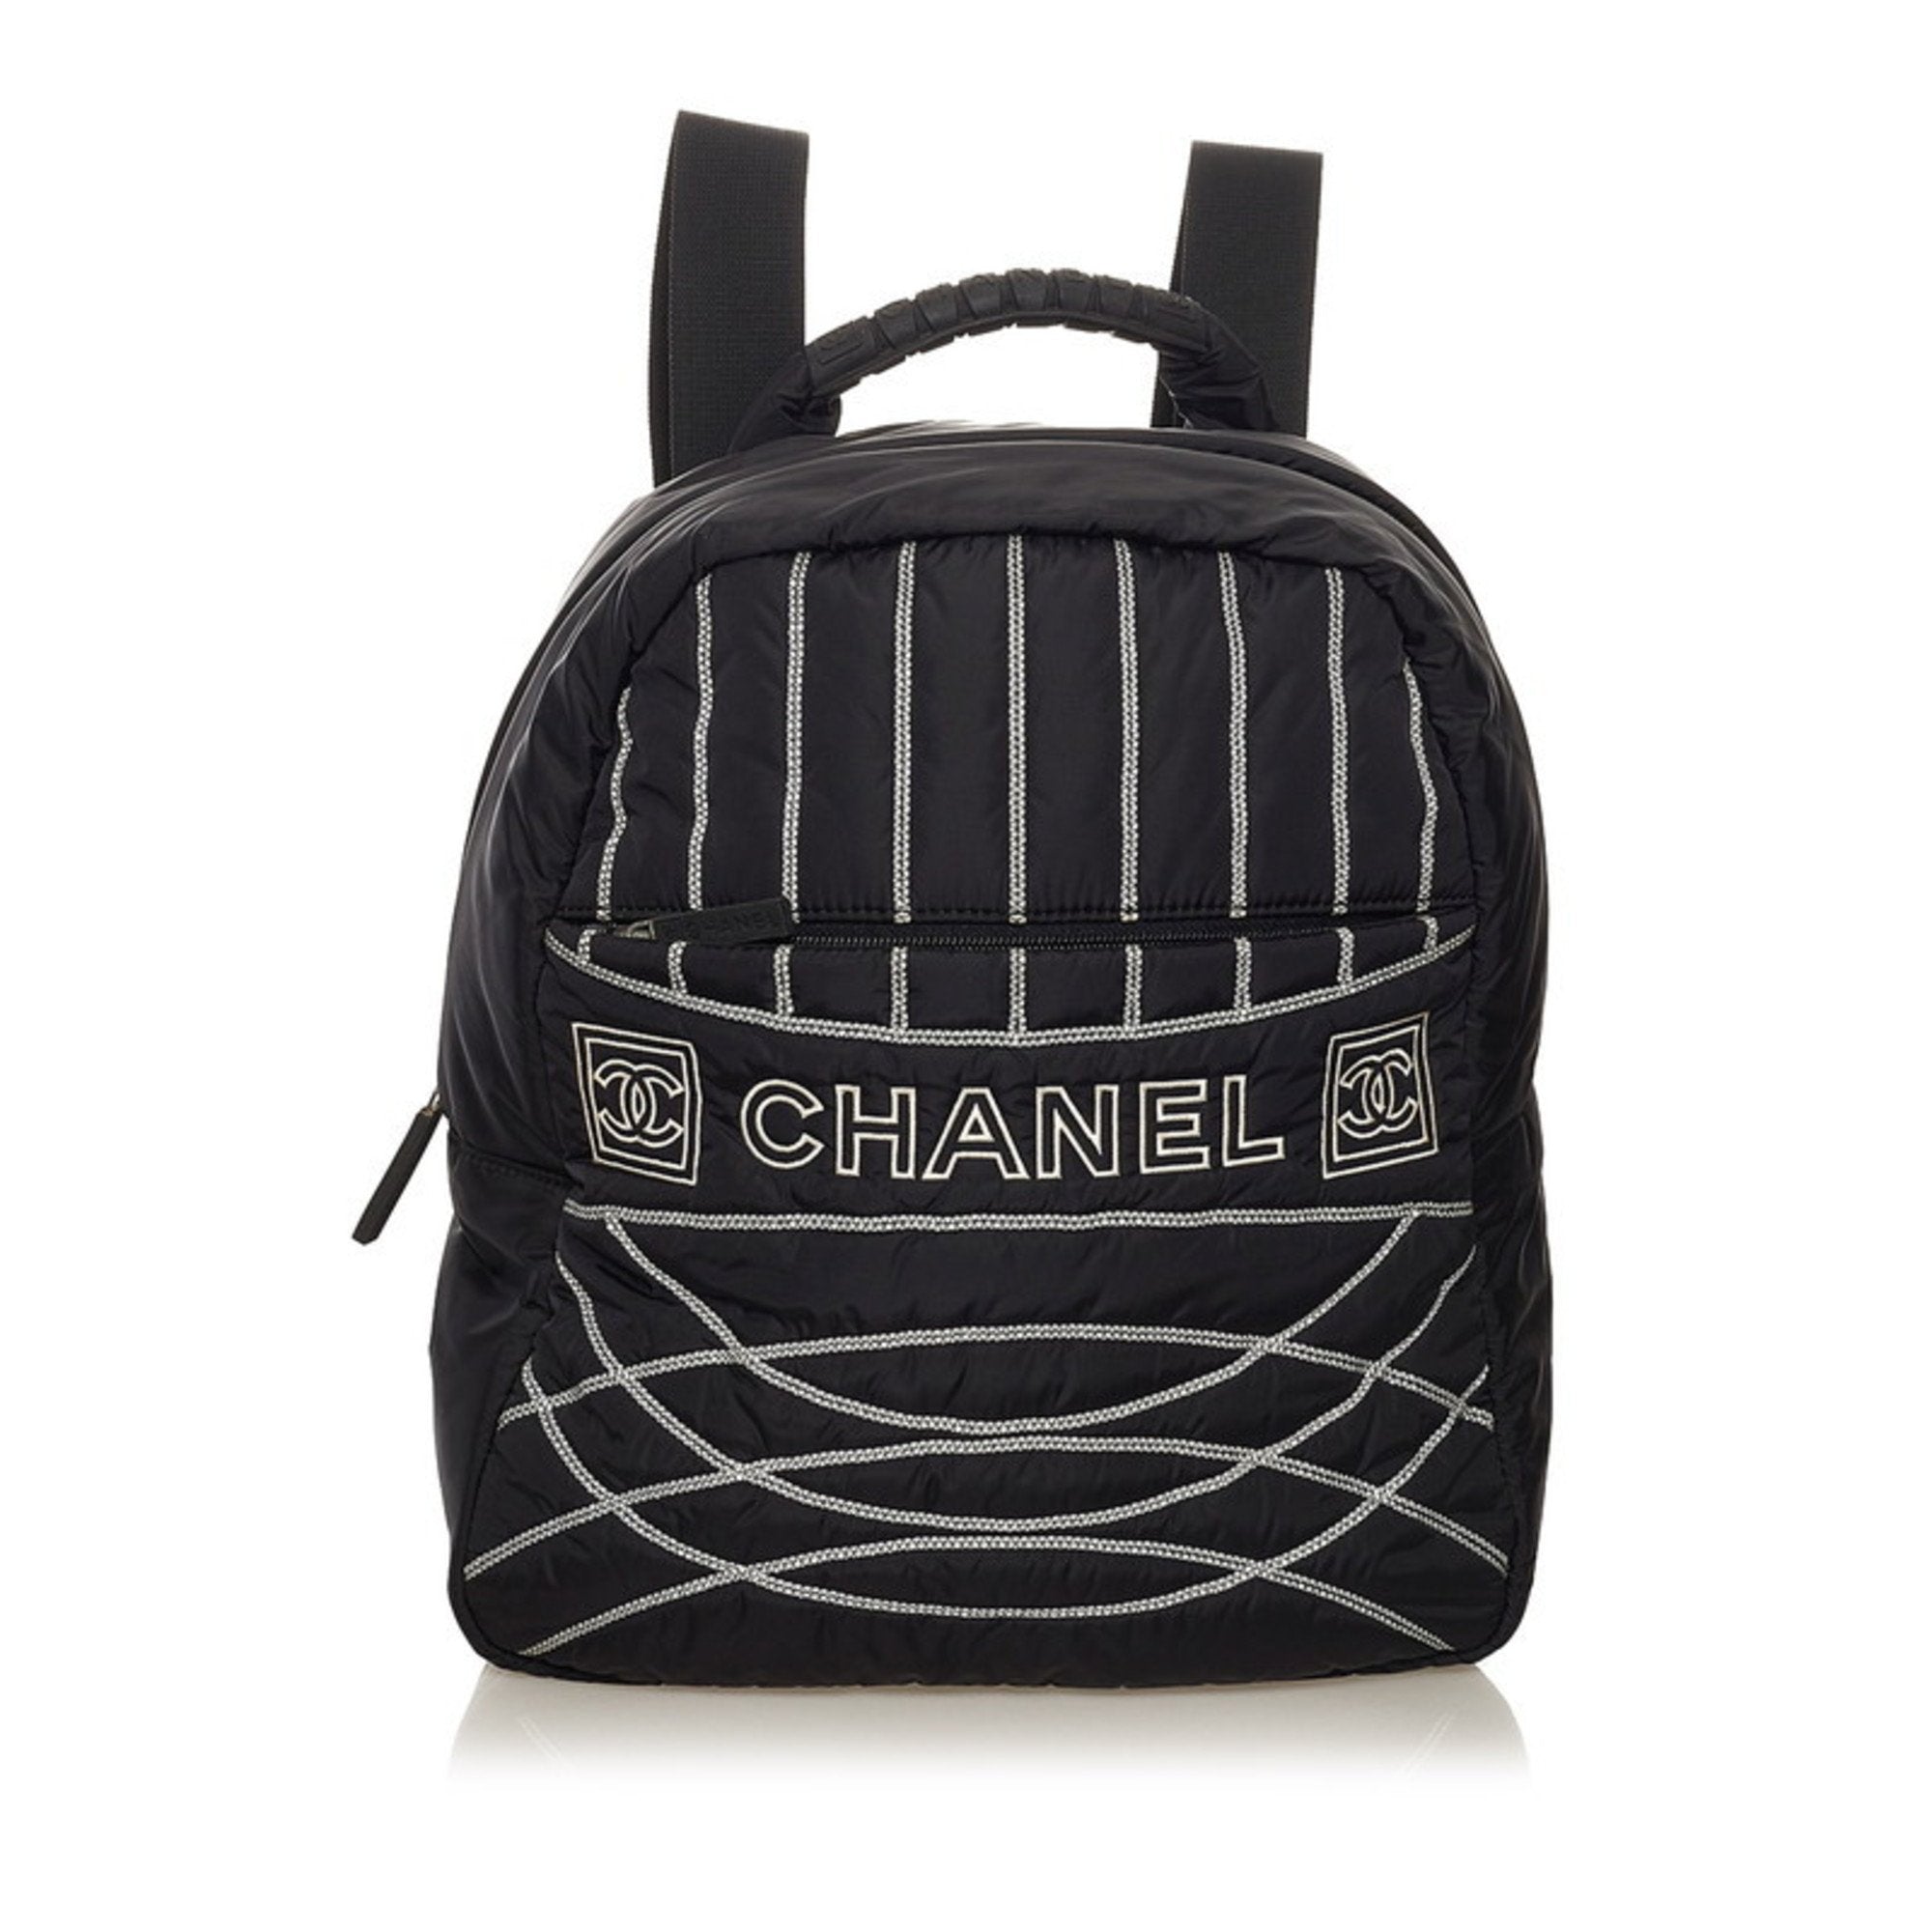 Chanel sports line rucksack backpack black nylon ladies CHANEL